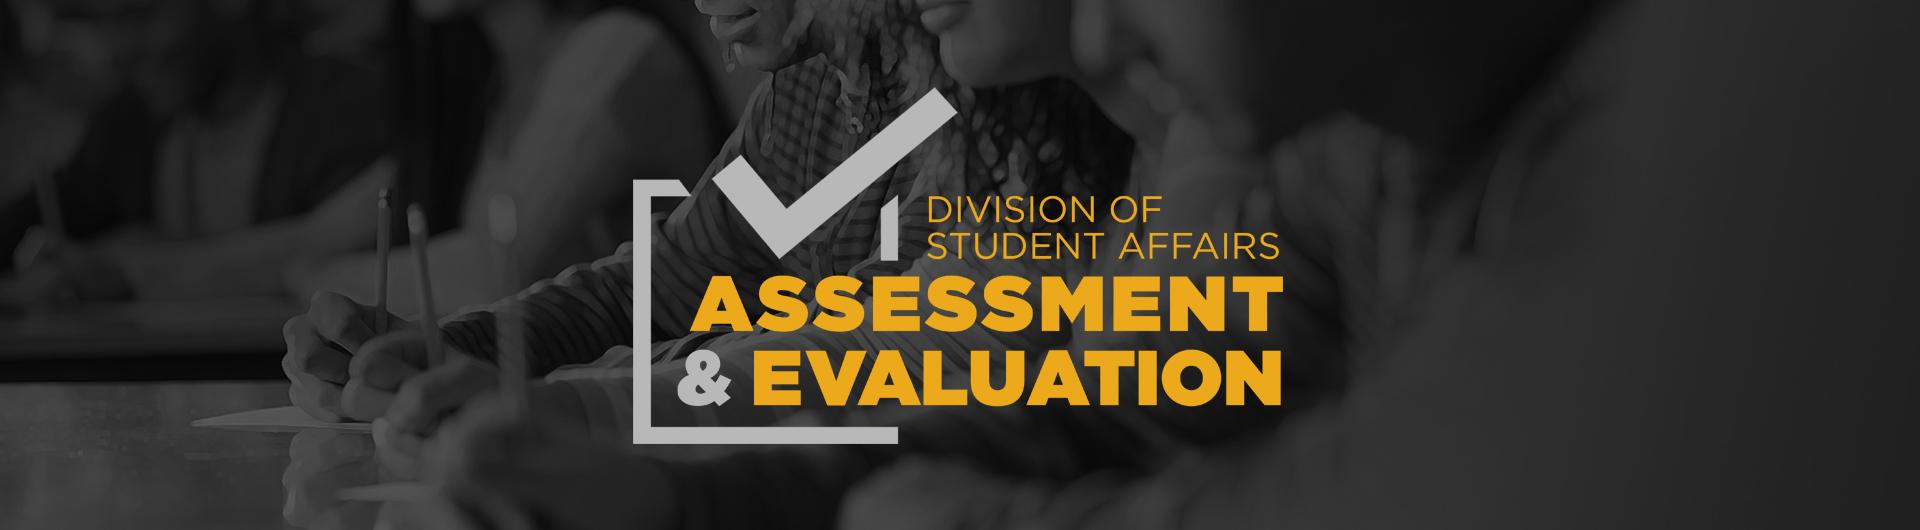 Banner for Assessment & Evaluation